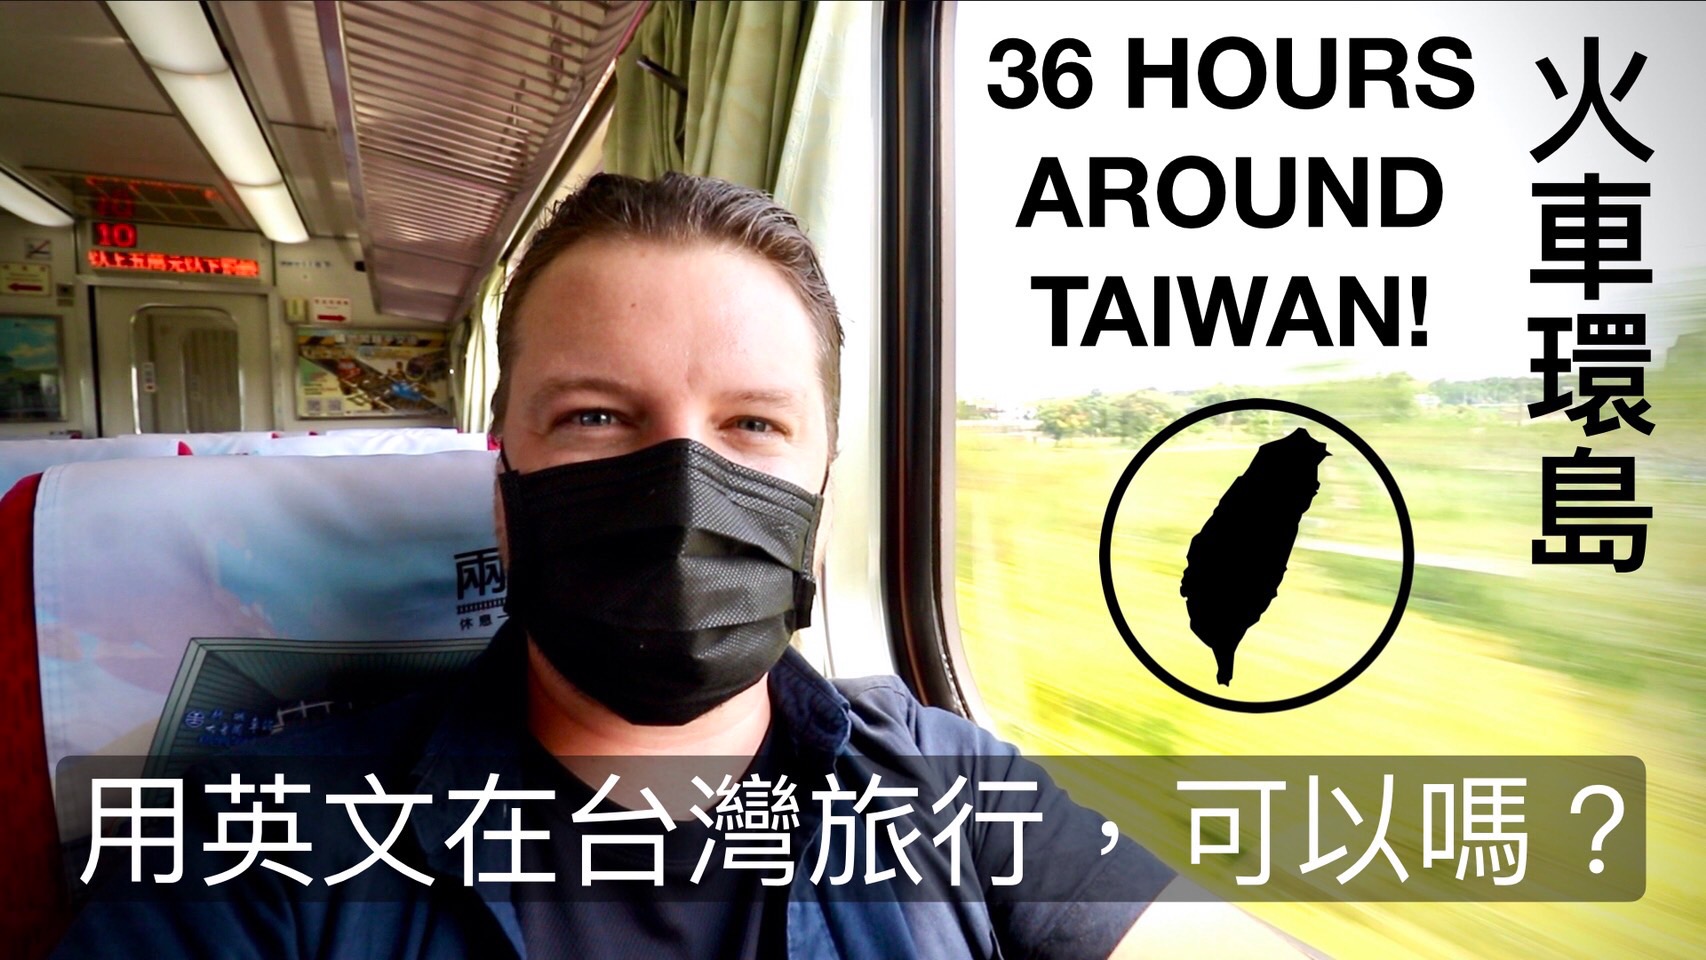 36 HOUR HUAN DAO BY TRAIN! Is Taiwan Travel English Friendly?